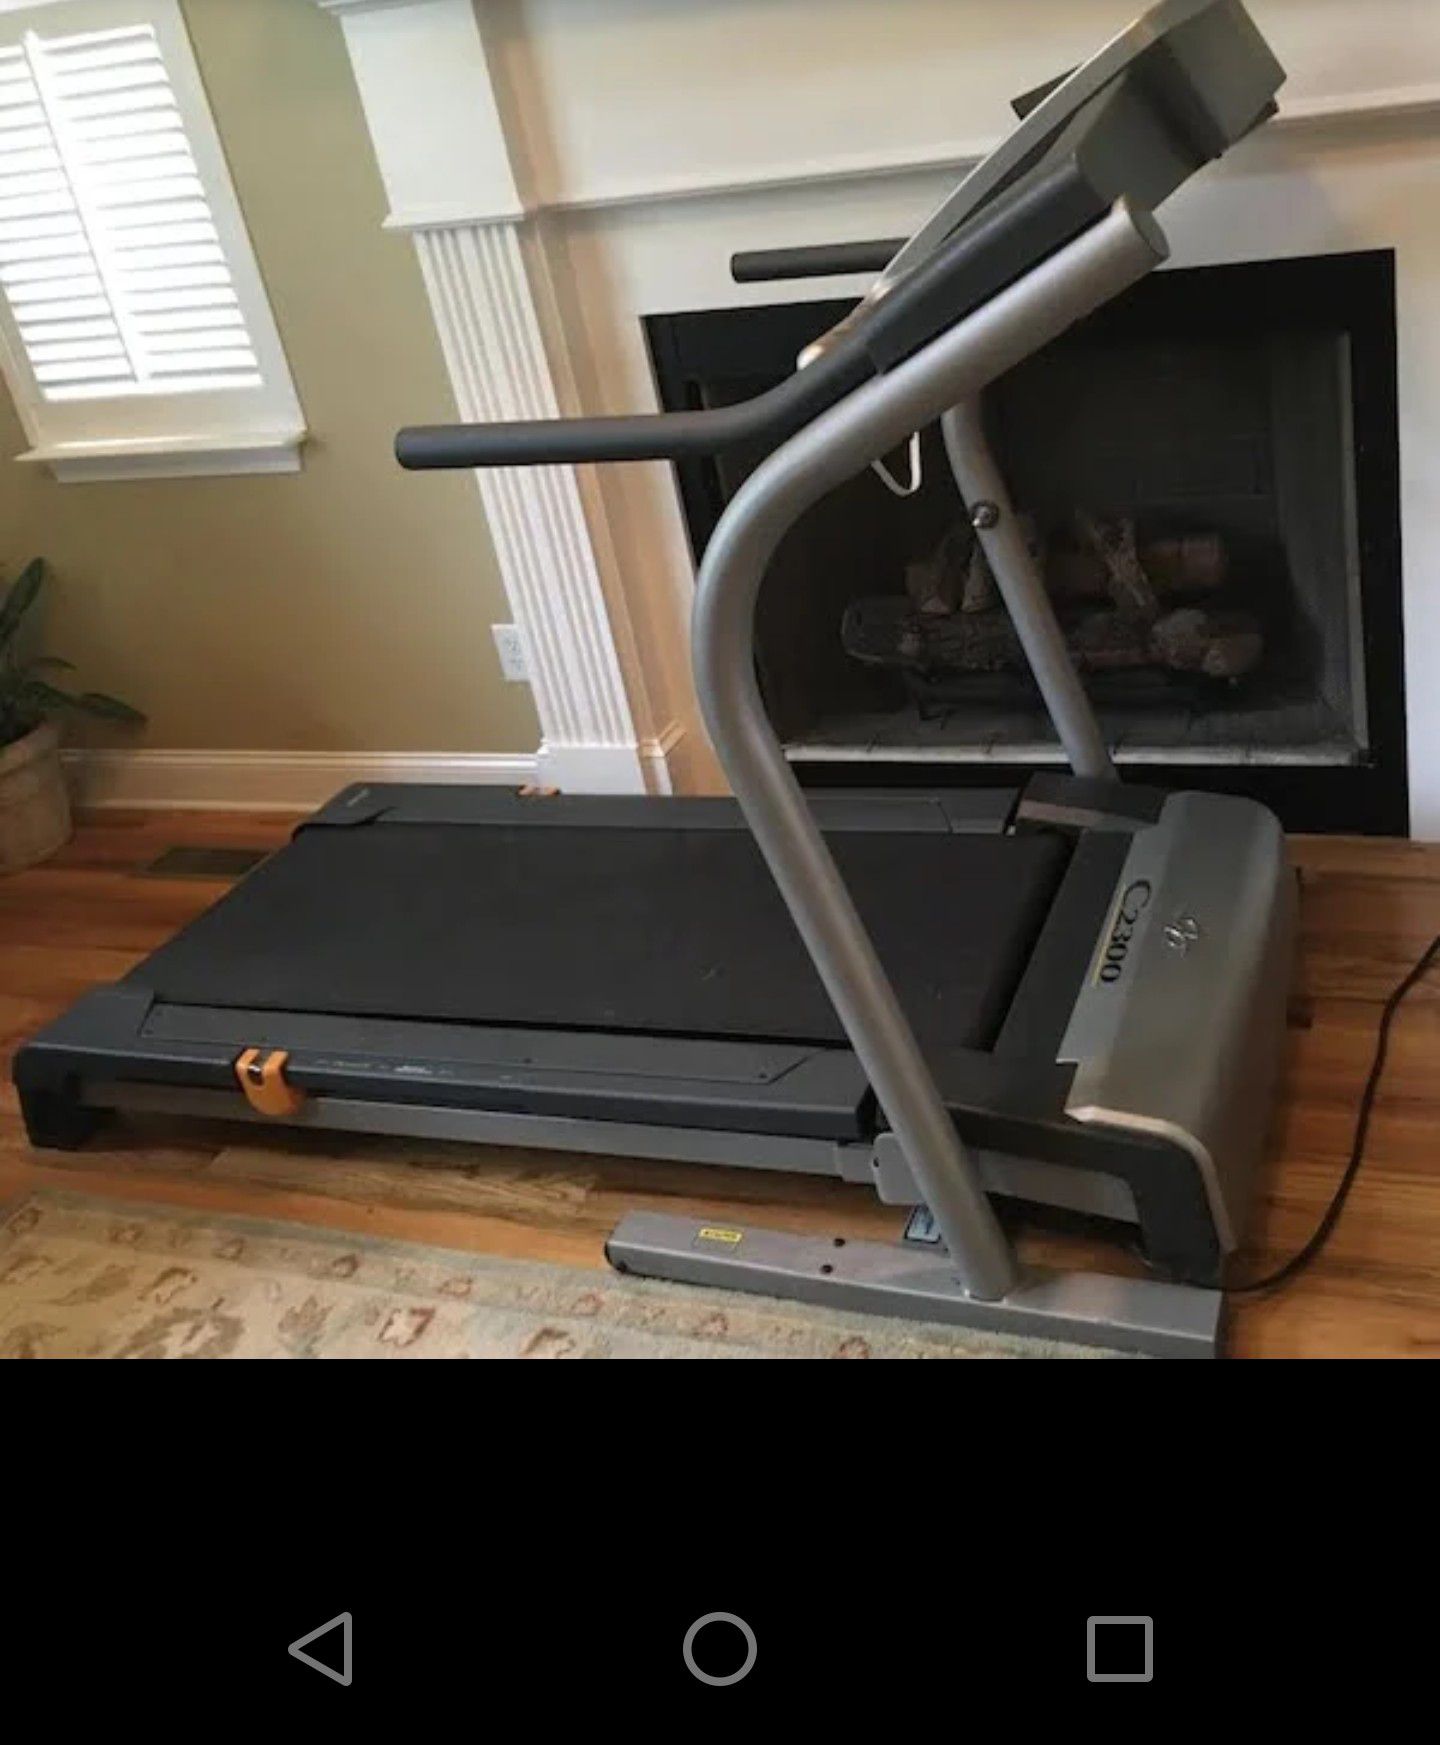 NordicTrack C2300 Treadmill